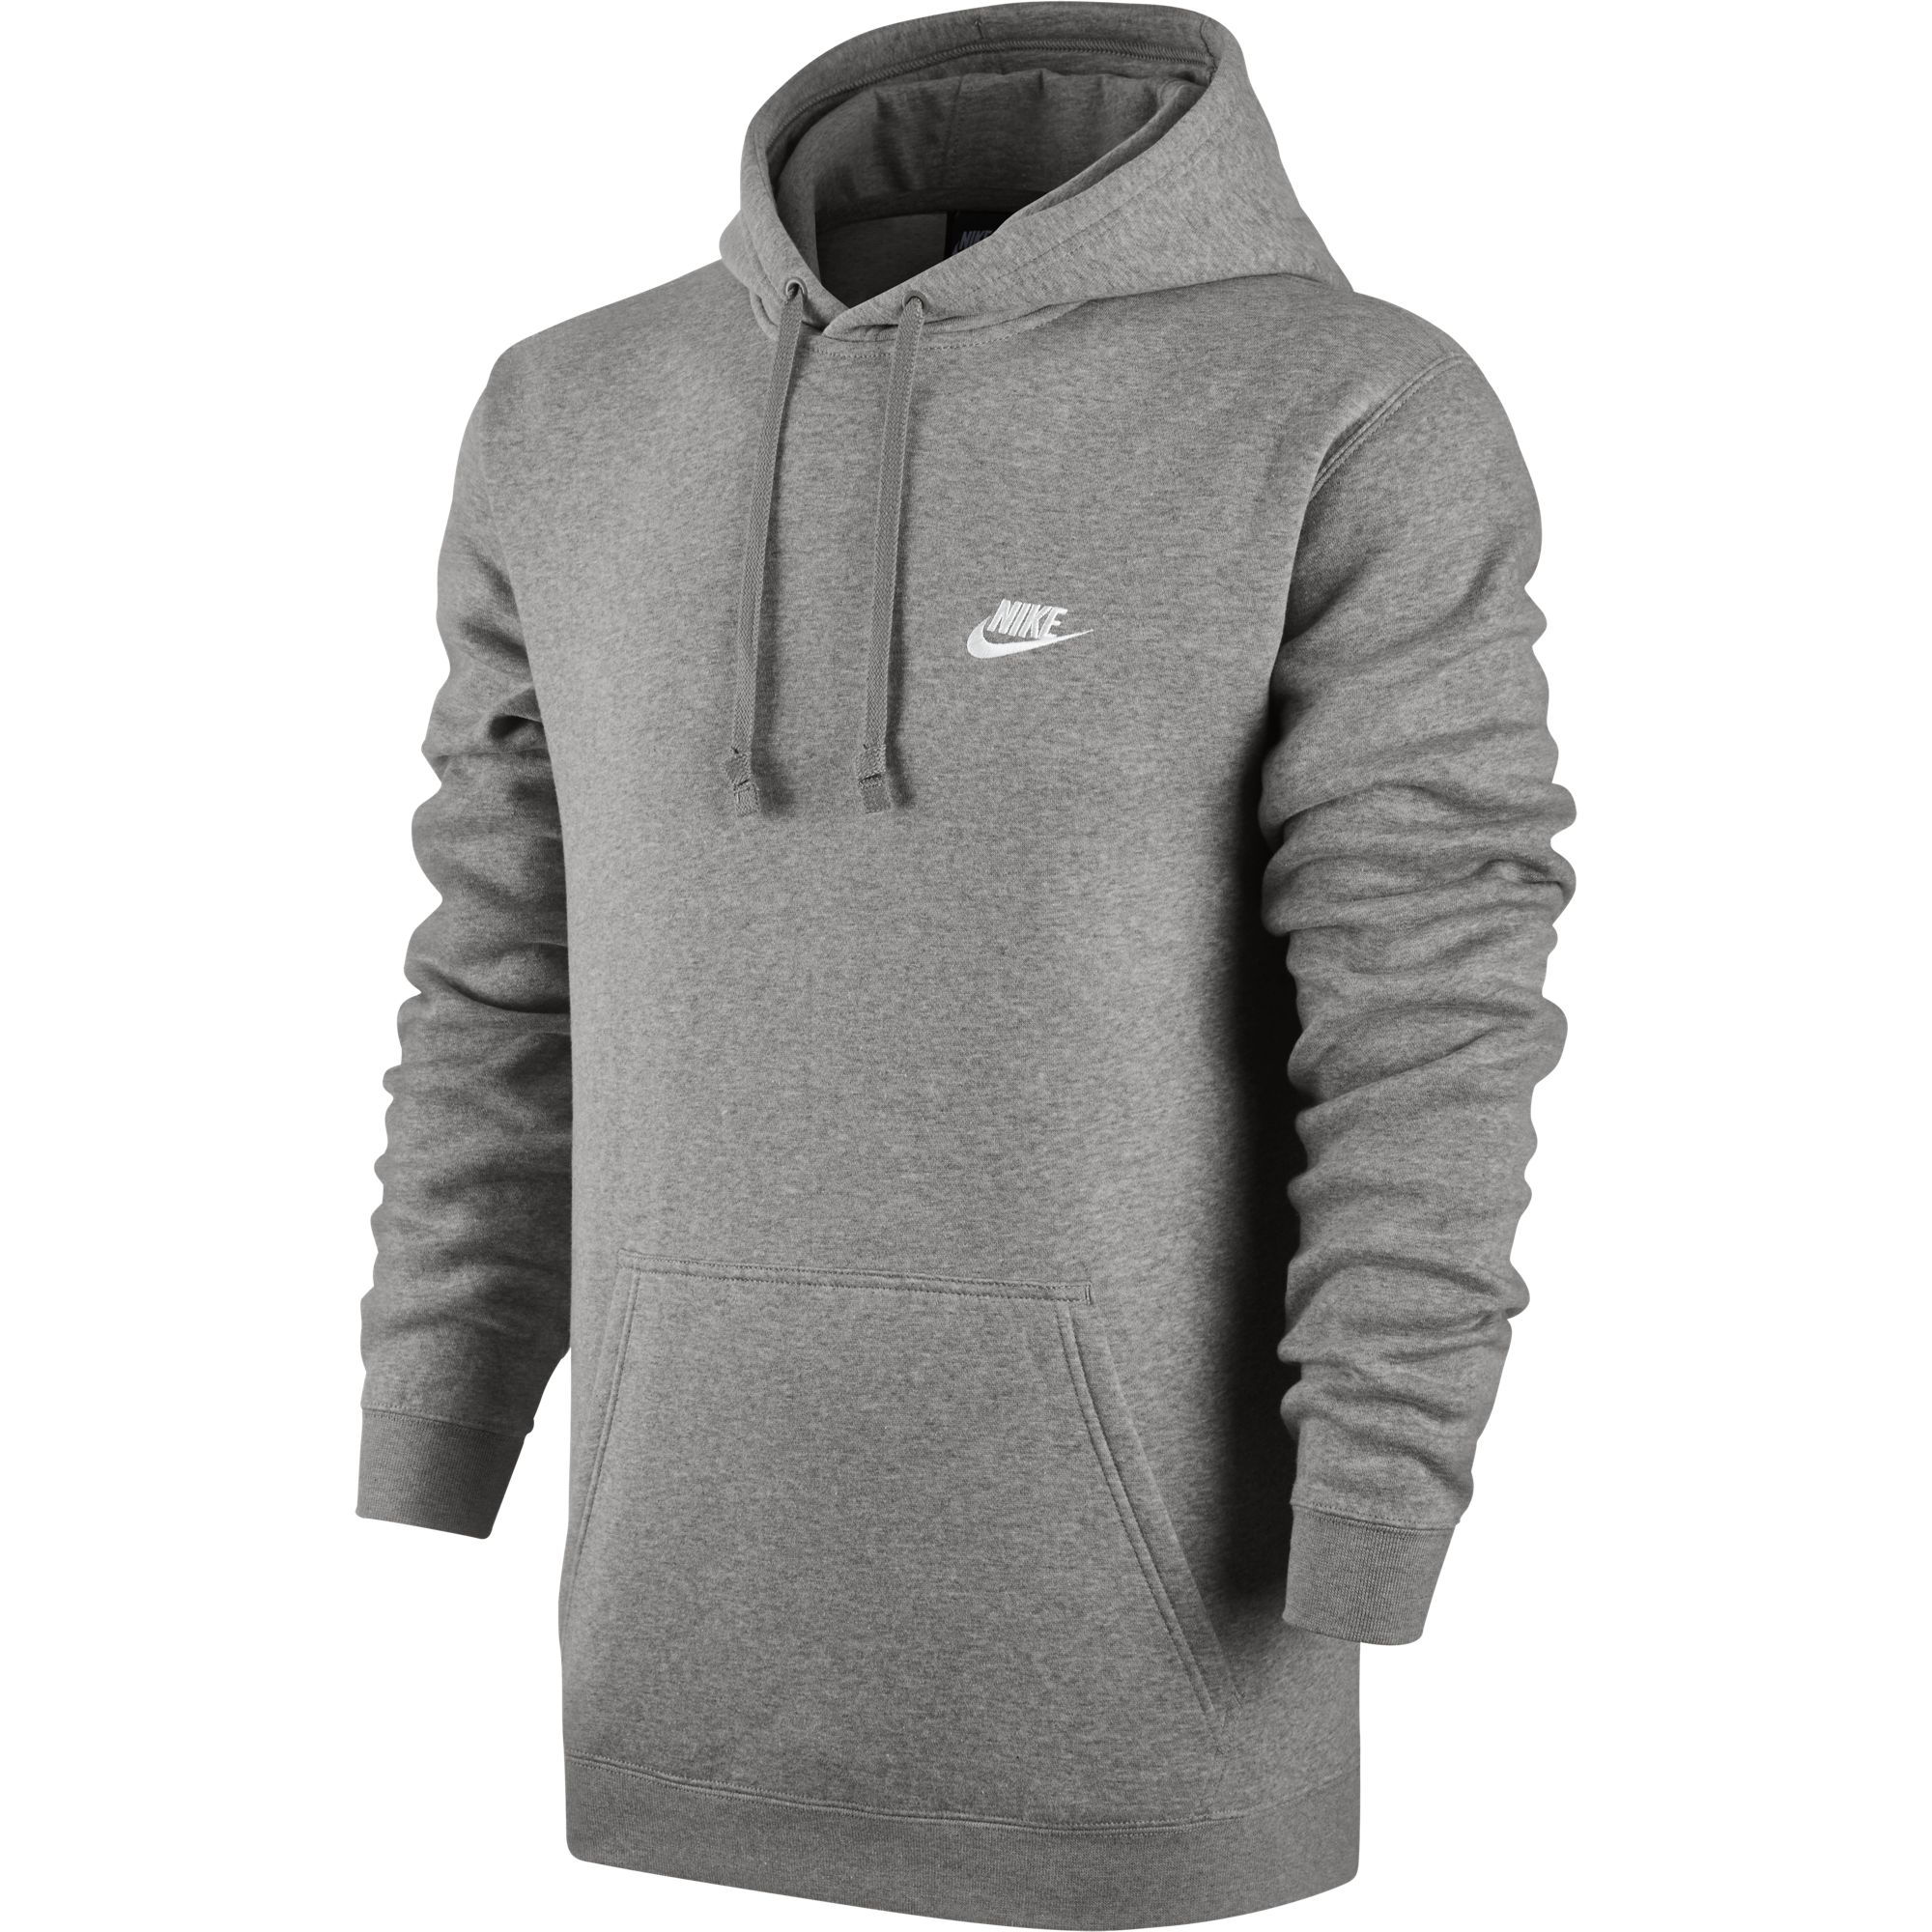 Толстовка Nike Sportswear Hoodie Fleece - картинка